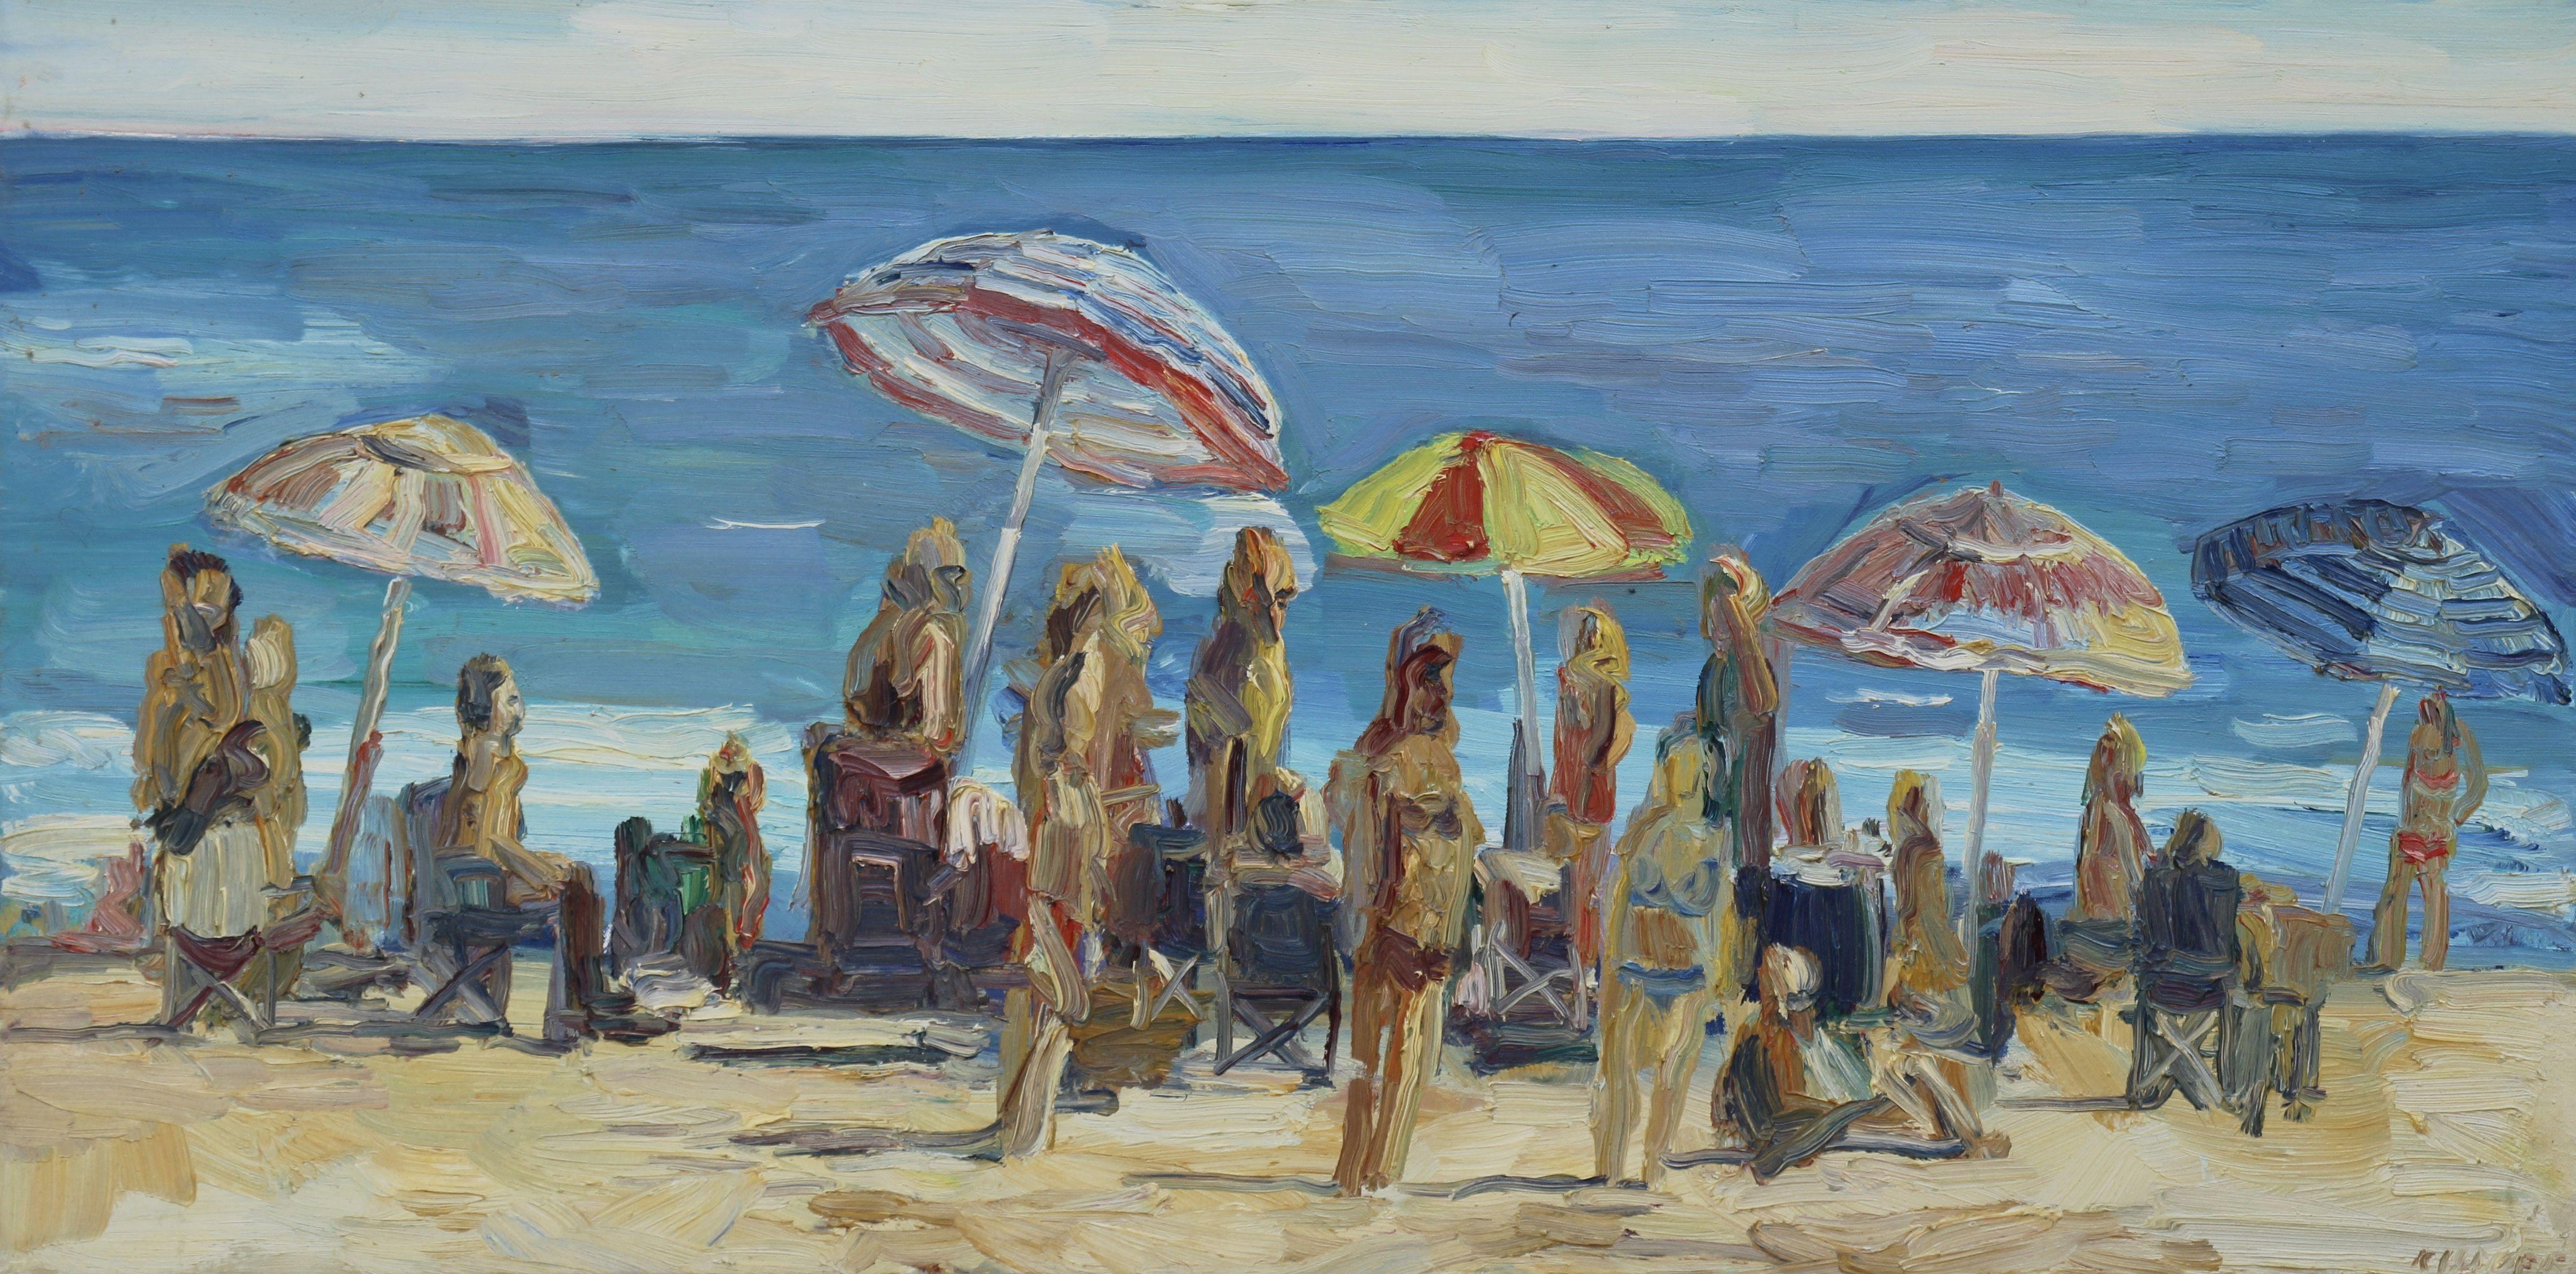 the sunbathers painting